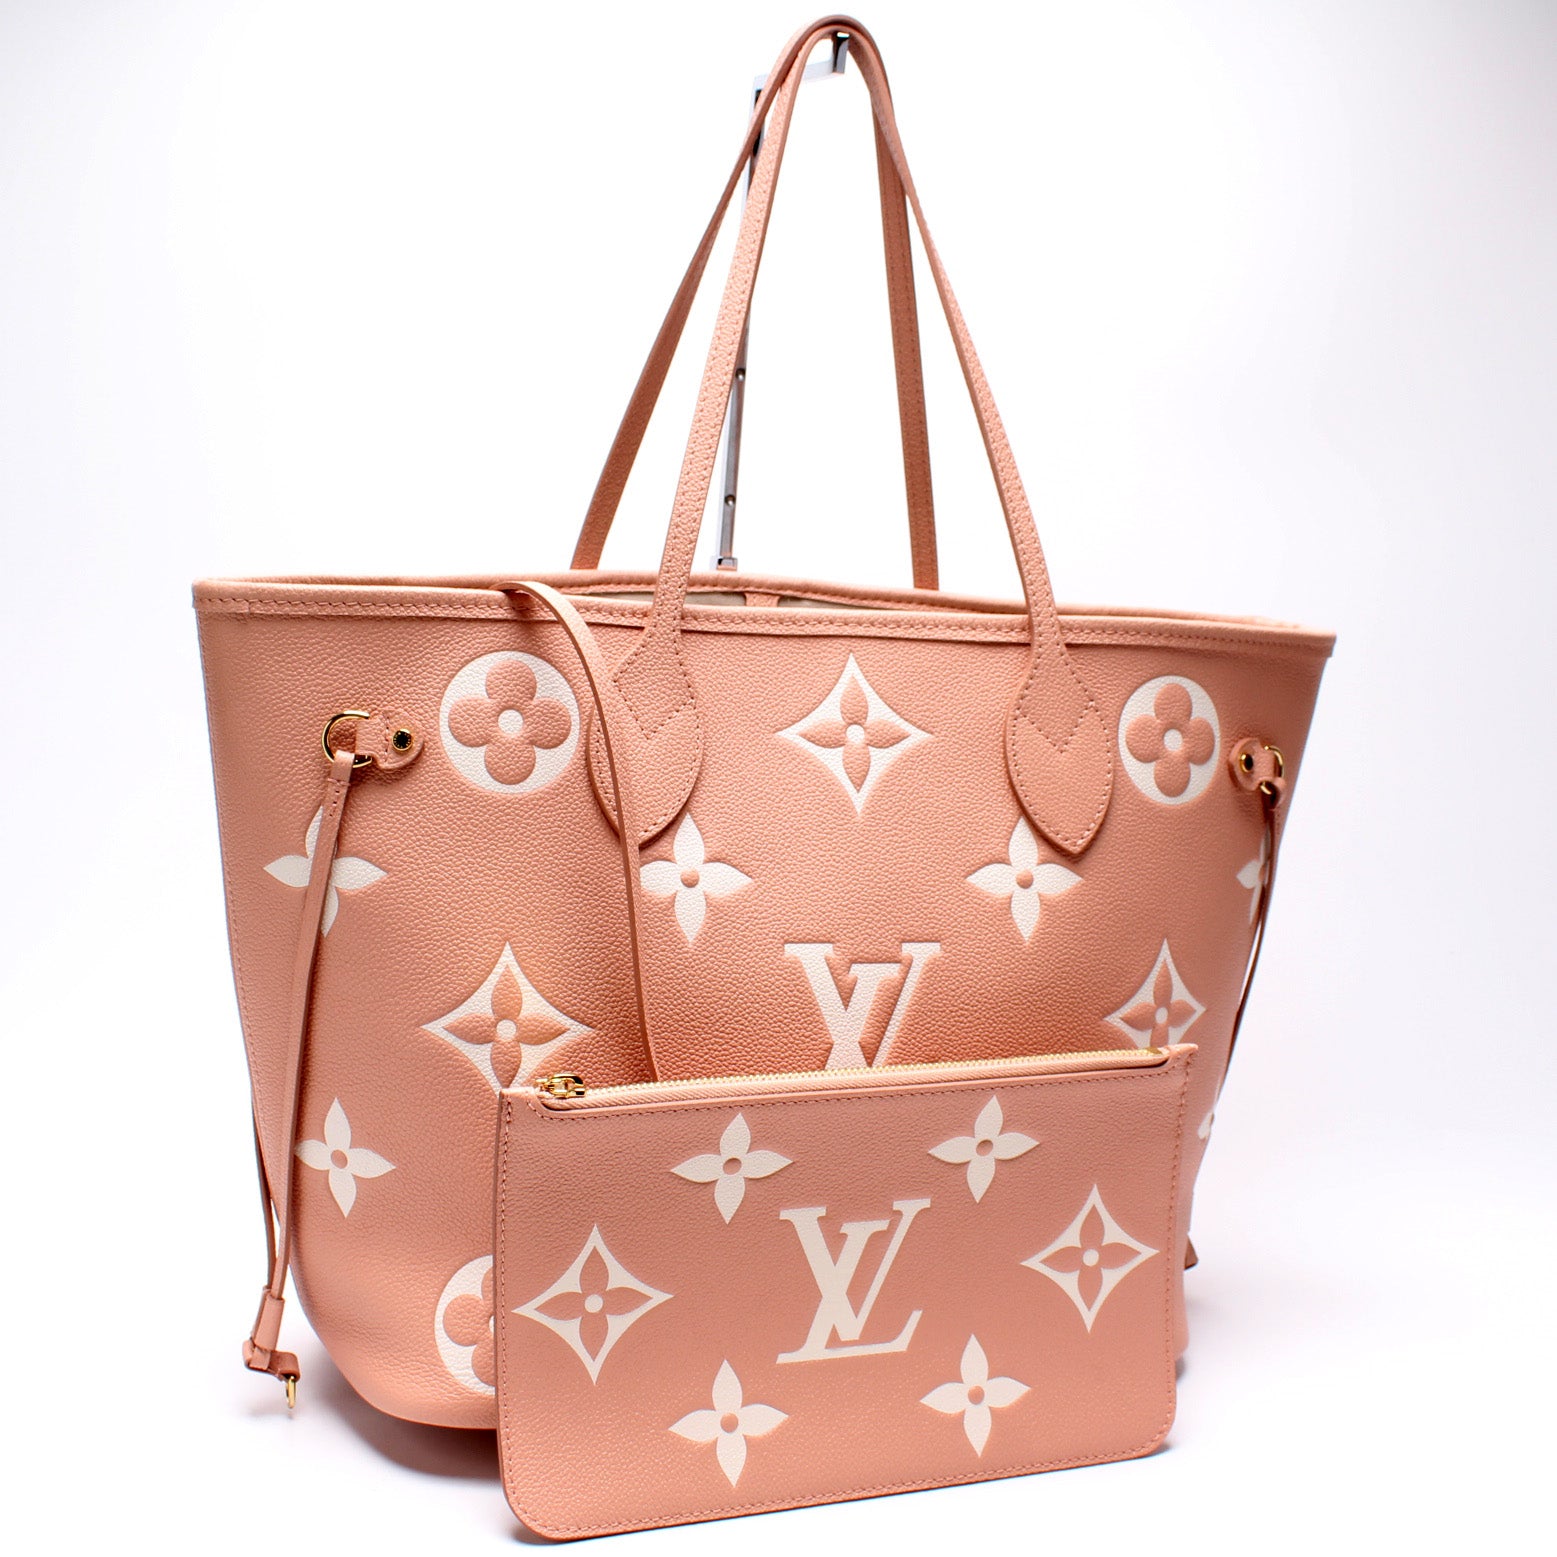 Louis Vuitton Neverfull empreinte clutch - Good or Bag